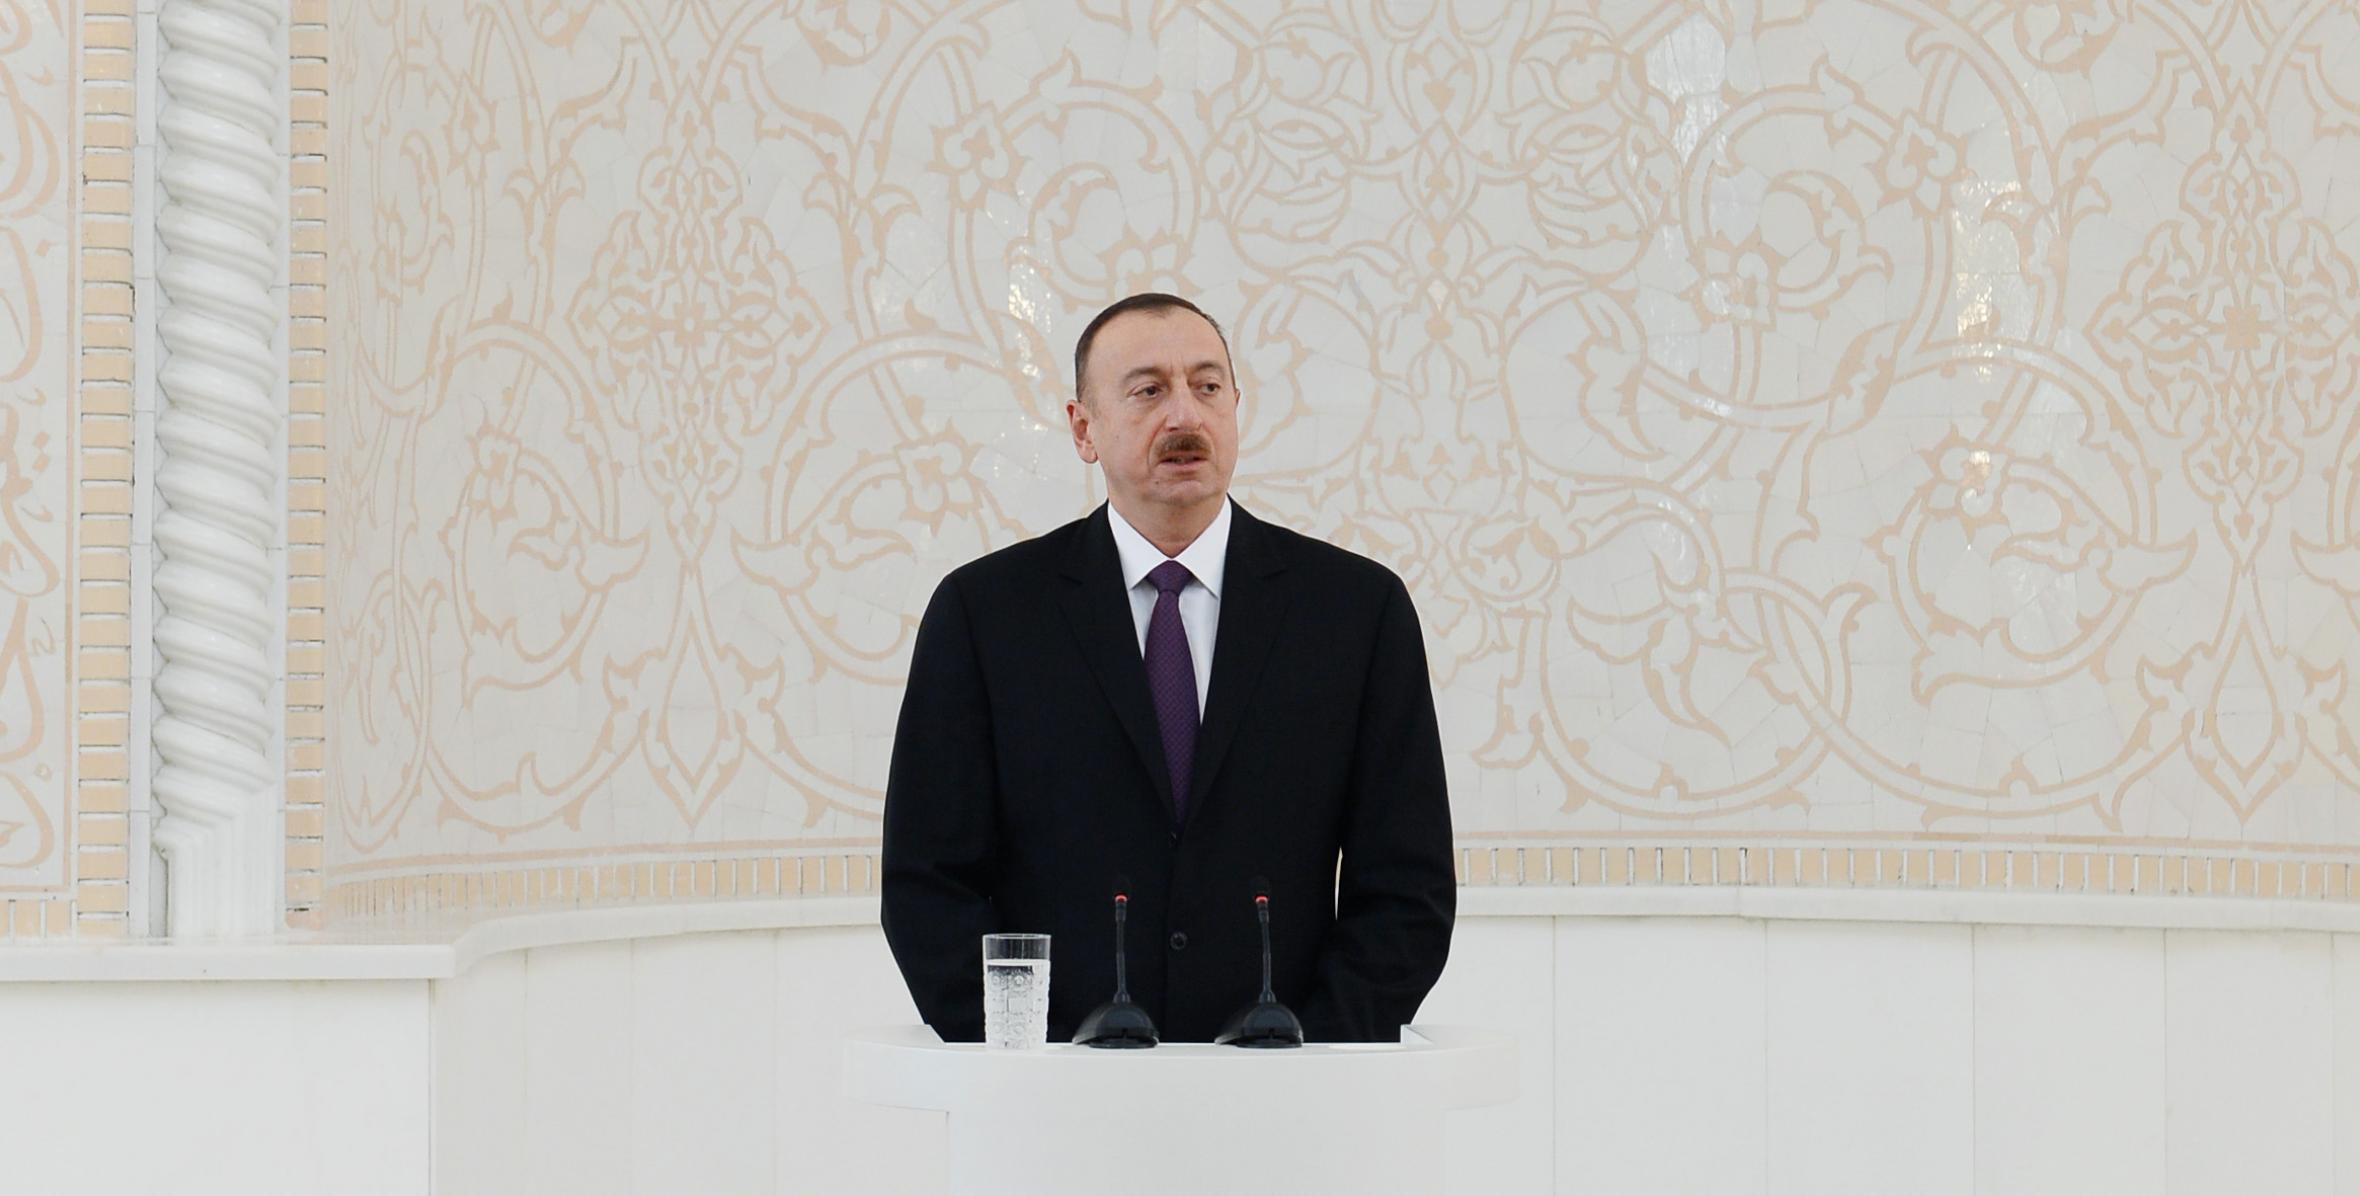 Speech by Ilham Aliyev at the opening of Heydar Mosque in Baku